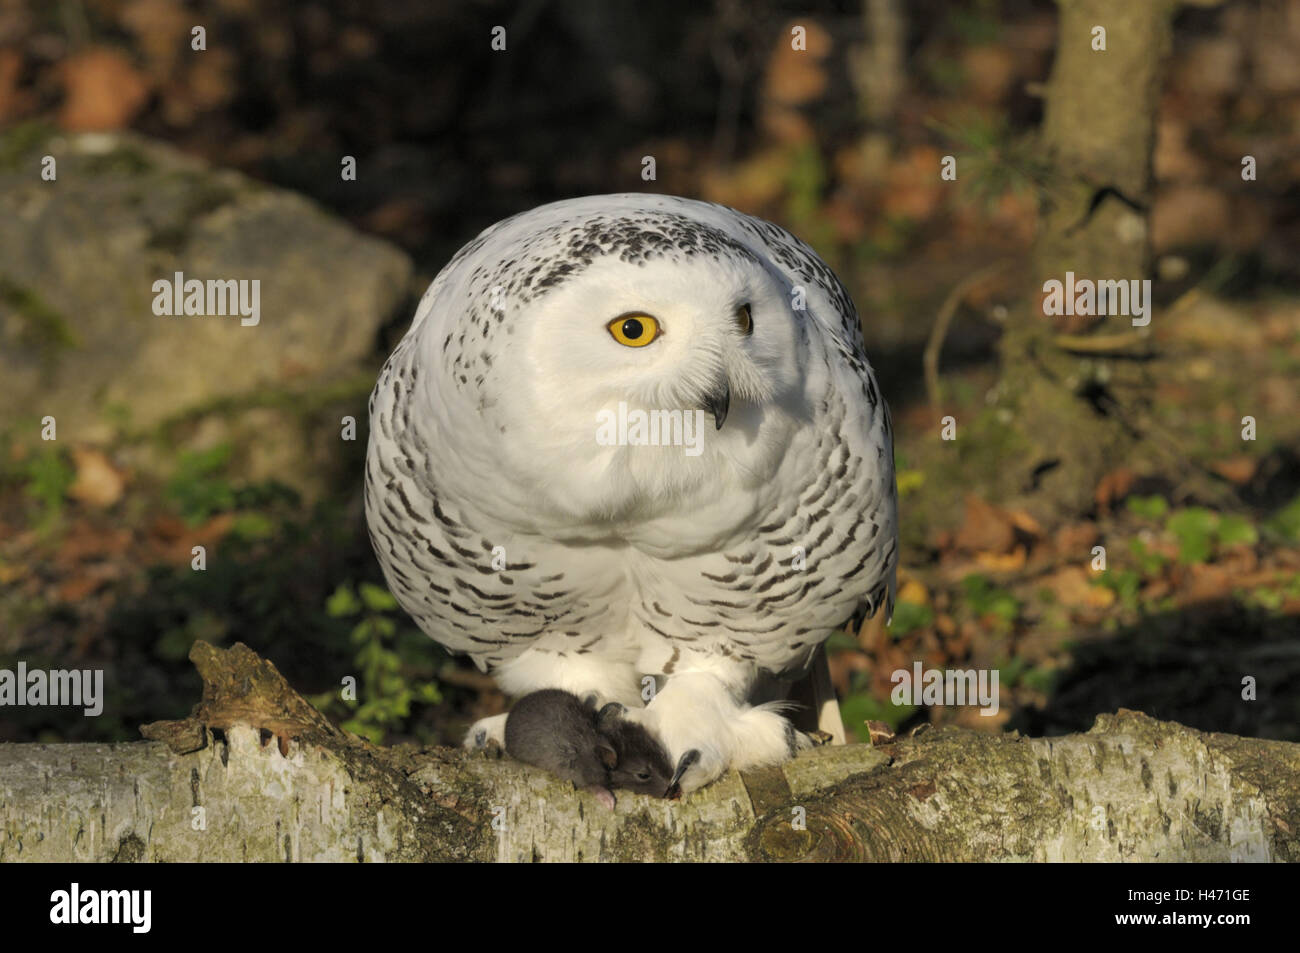 Snow owl, Nyctea scandiaca, prey, Stock Photo